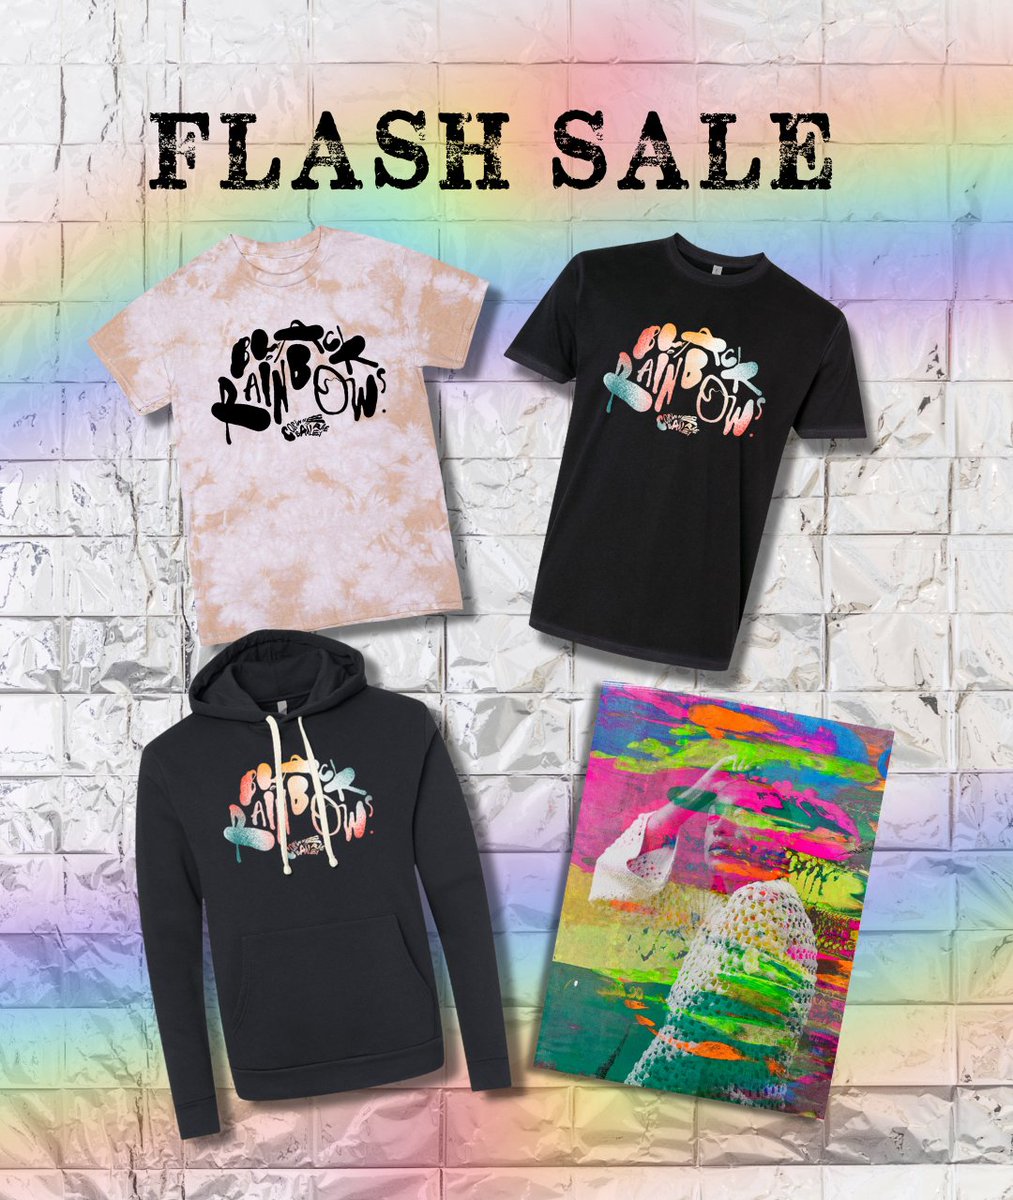 FLASH SALE 🖤 Shop all Black Rainbows merch at 20% off starting now through Monday at 12pm EST Store -> corinnebaileyrae.com/shop